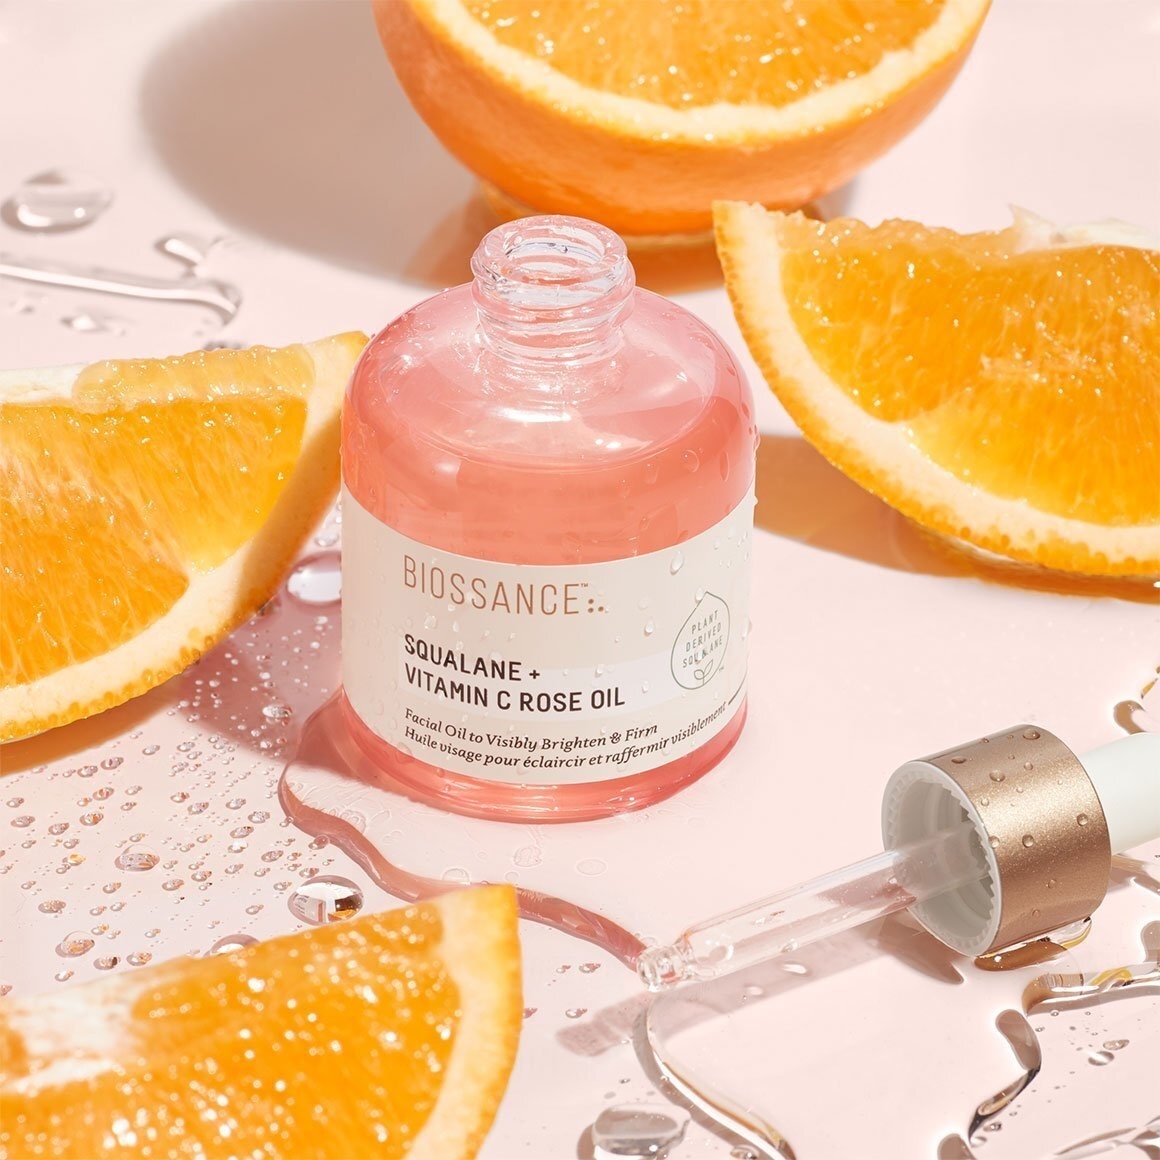 Pink dropper bottle of Biossance Squalane + Vitamin C Rose Oil next to orange slices